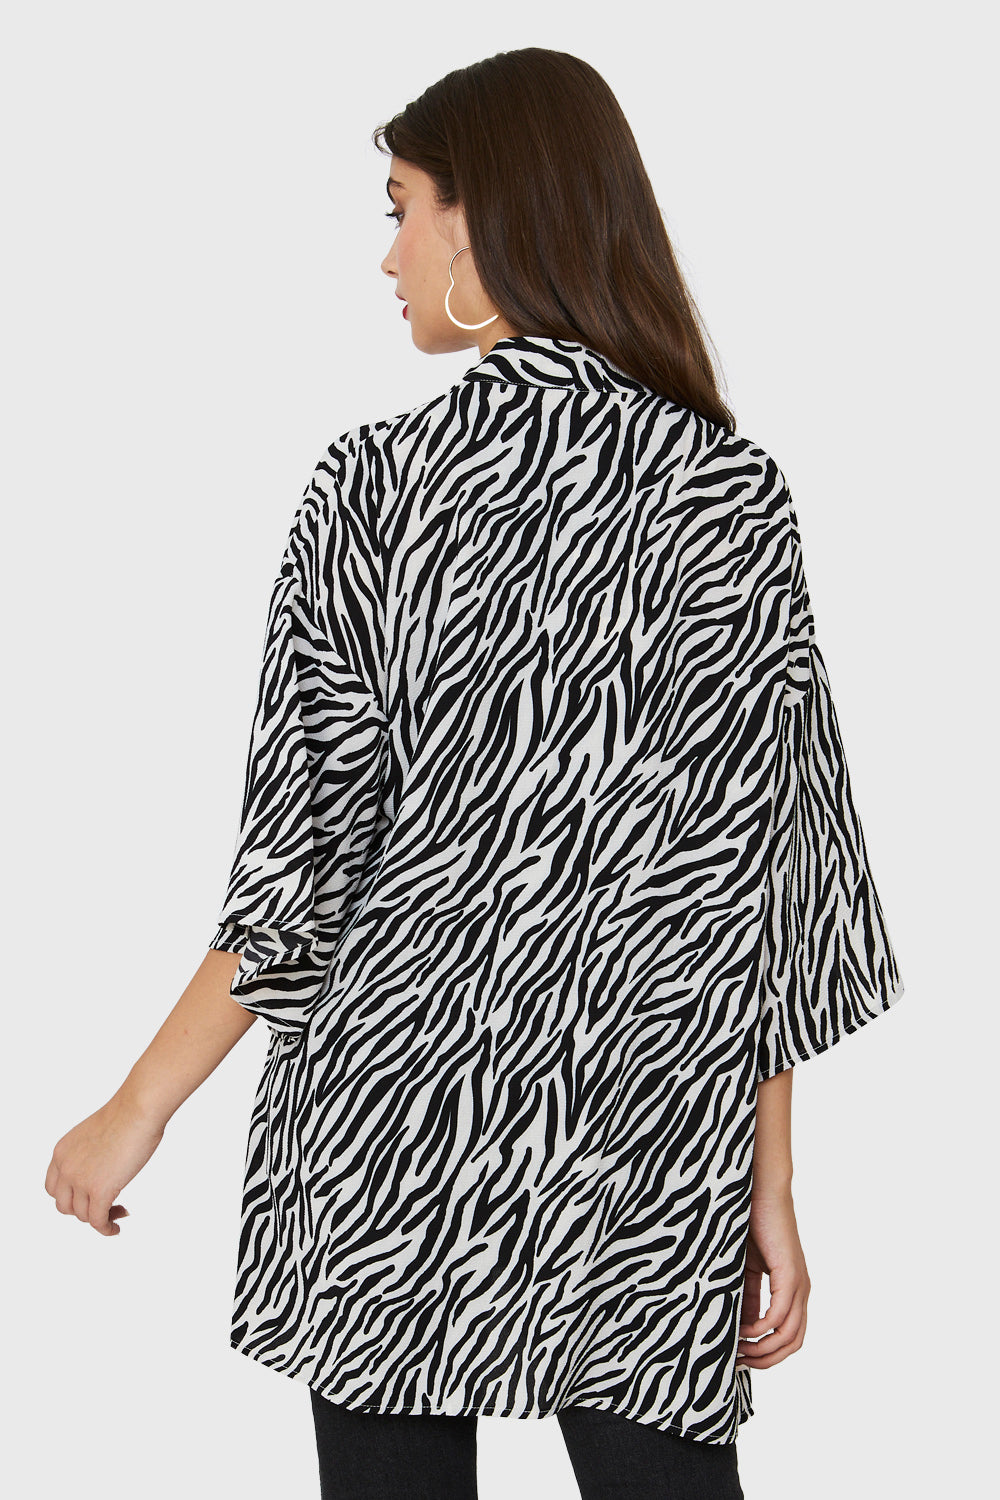 Kimono Animal Print Cebra Blanco